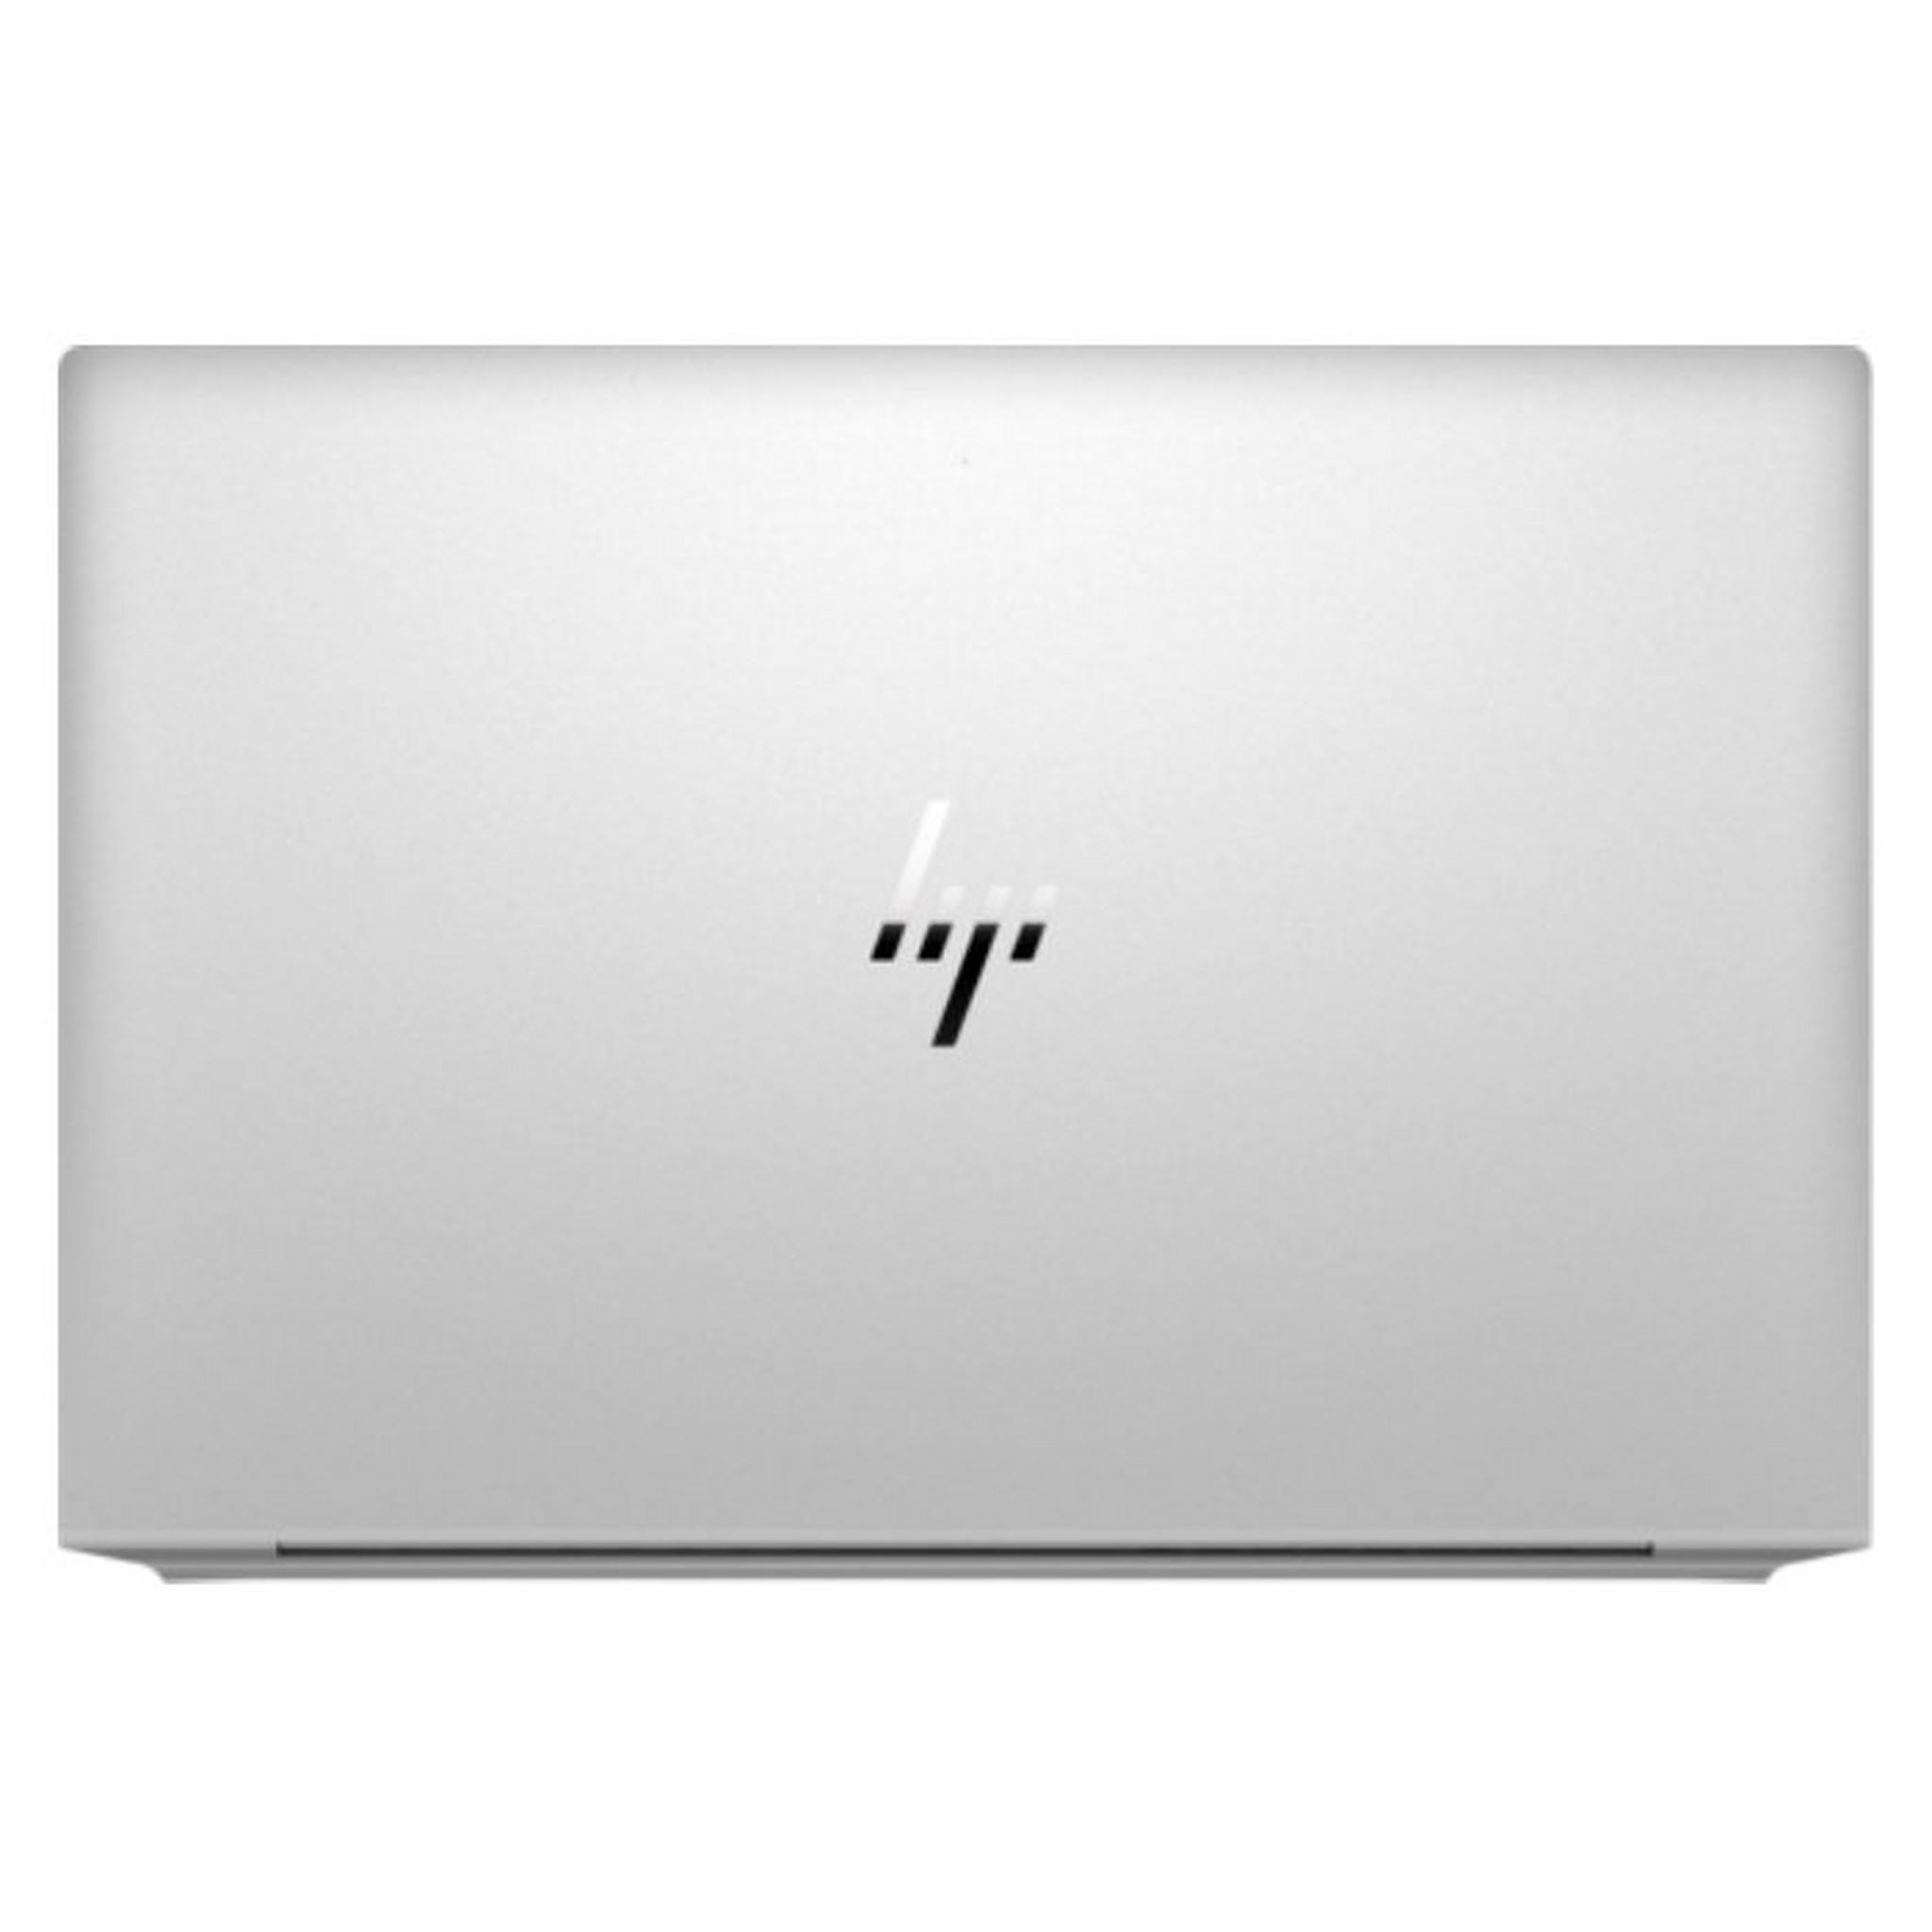 HP EliteBook 840 Intel Core i7 11th Gen, 16GB RAM, 512GB SSD, 14-inch FHD Laptop